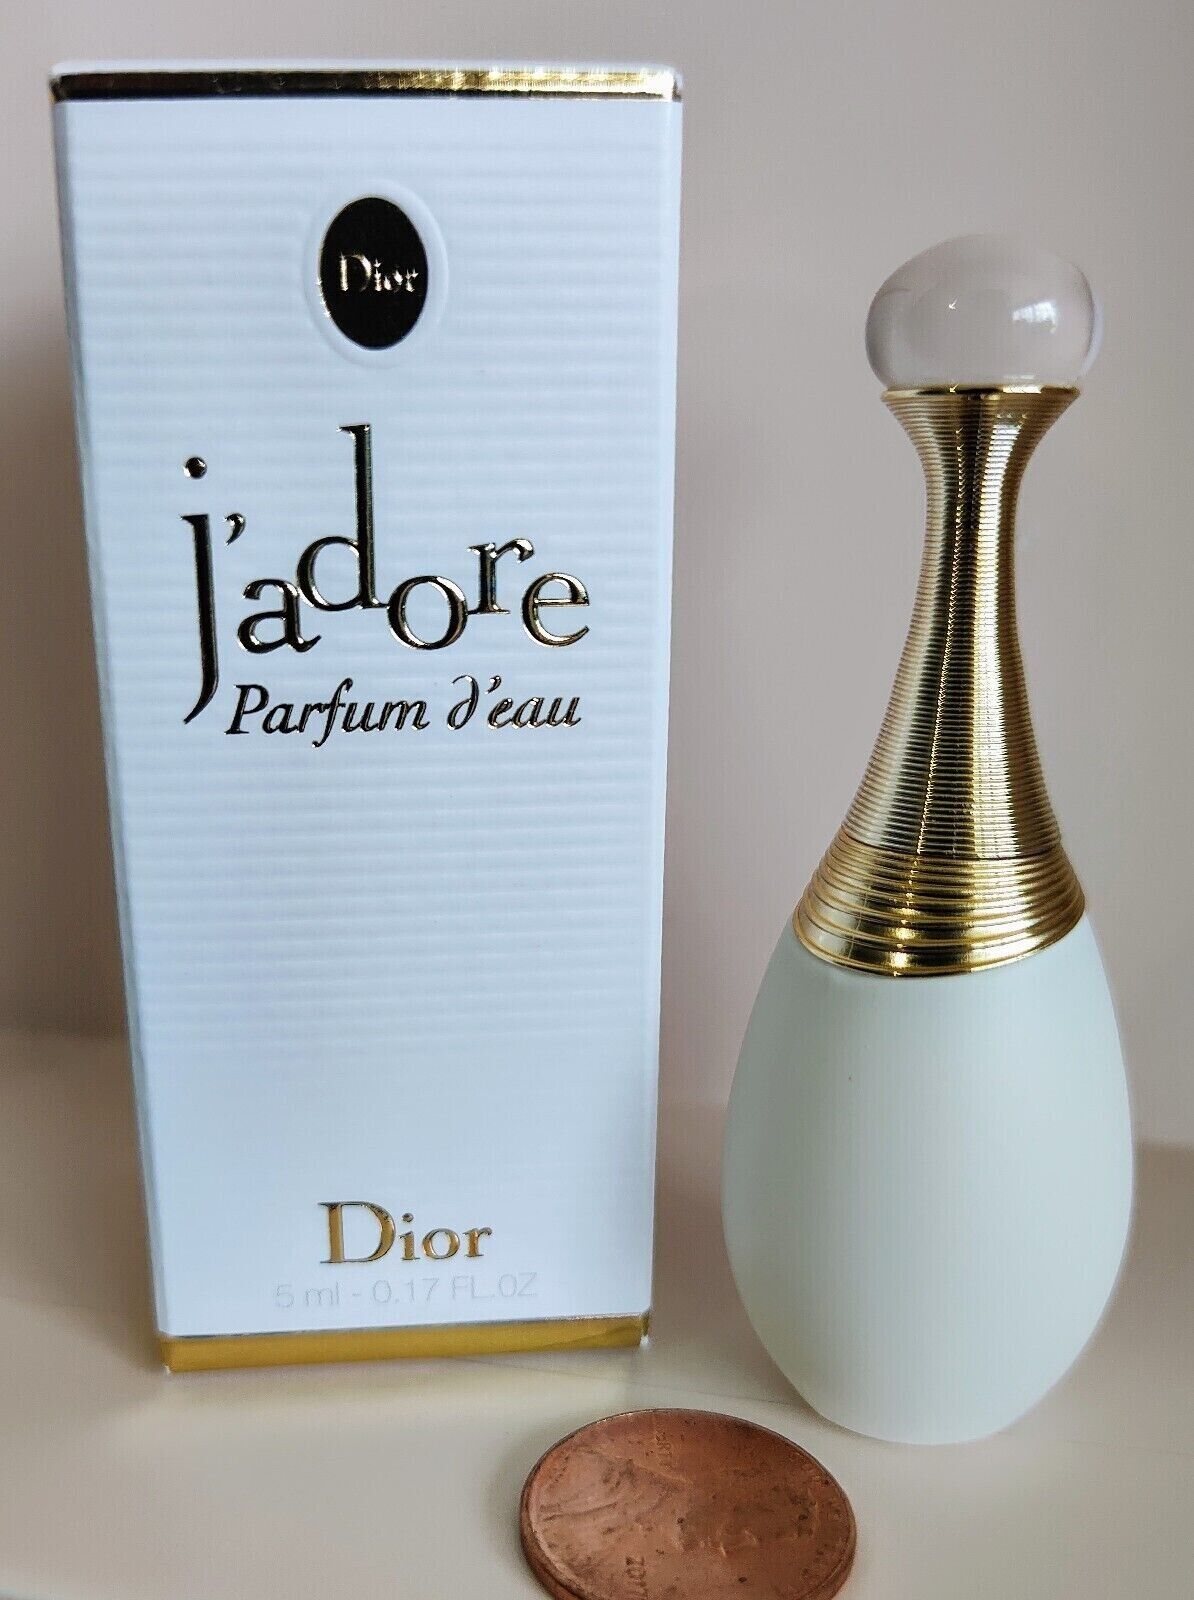 DIOR J'Adore PARFUM D'EAU Perfume 0.17 oz 5ml NEW in BOX Mini TRAVEL Splash DAB